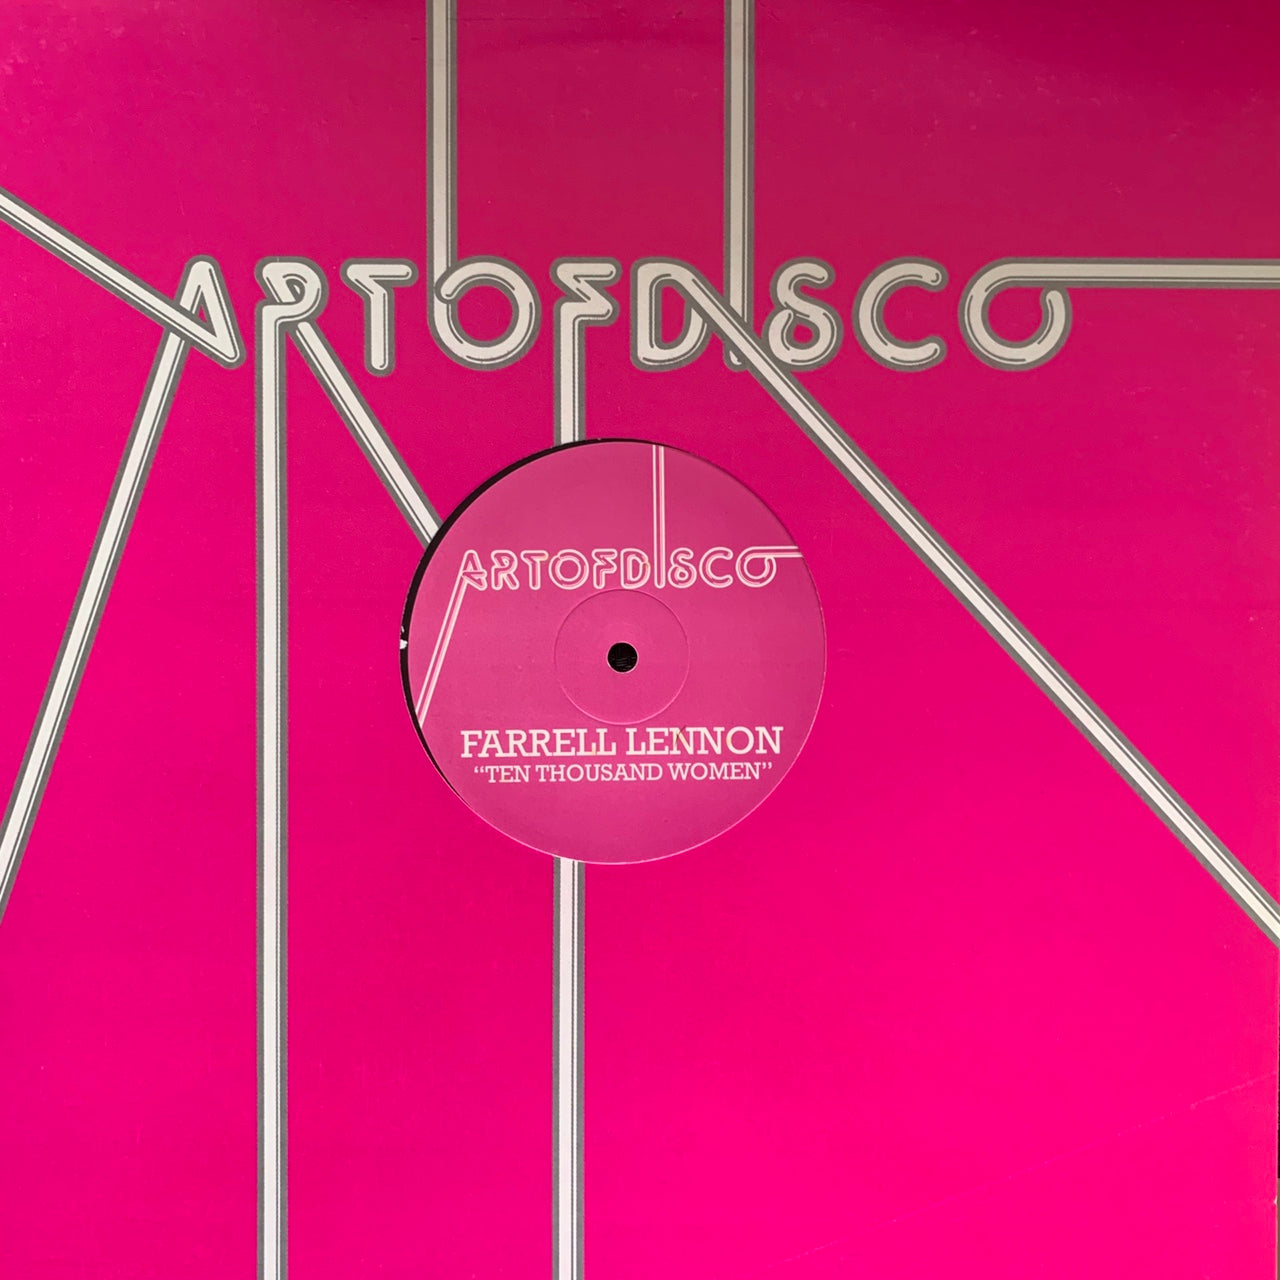 Art Of Disco “Ten Thousand Women” 2 version 12inch Vinyl